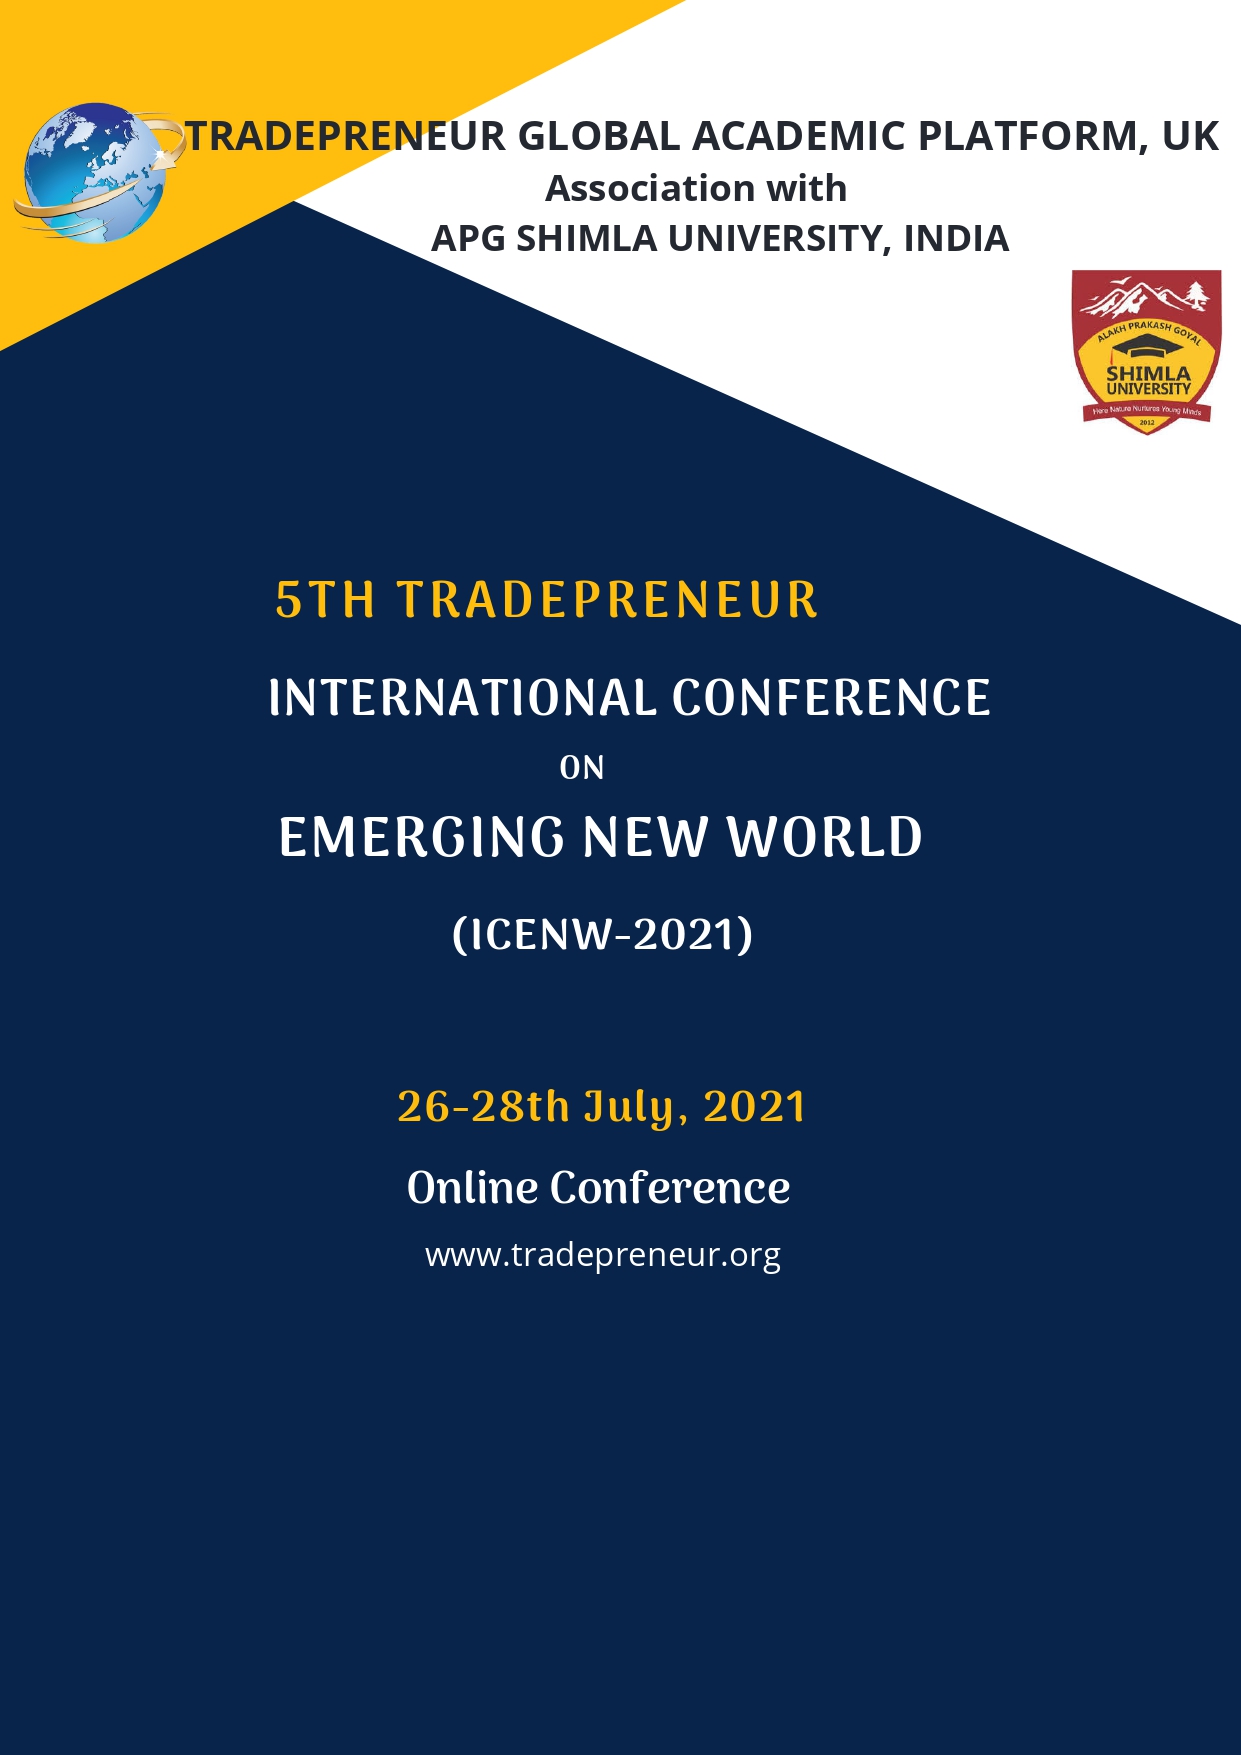 5th Tradepreneur International Conference on Emerging New World ( ICENW-2021) in Academic Partnership with IFTM UNIVERSITY MORADABAD